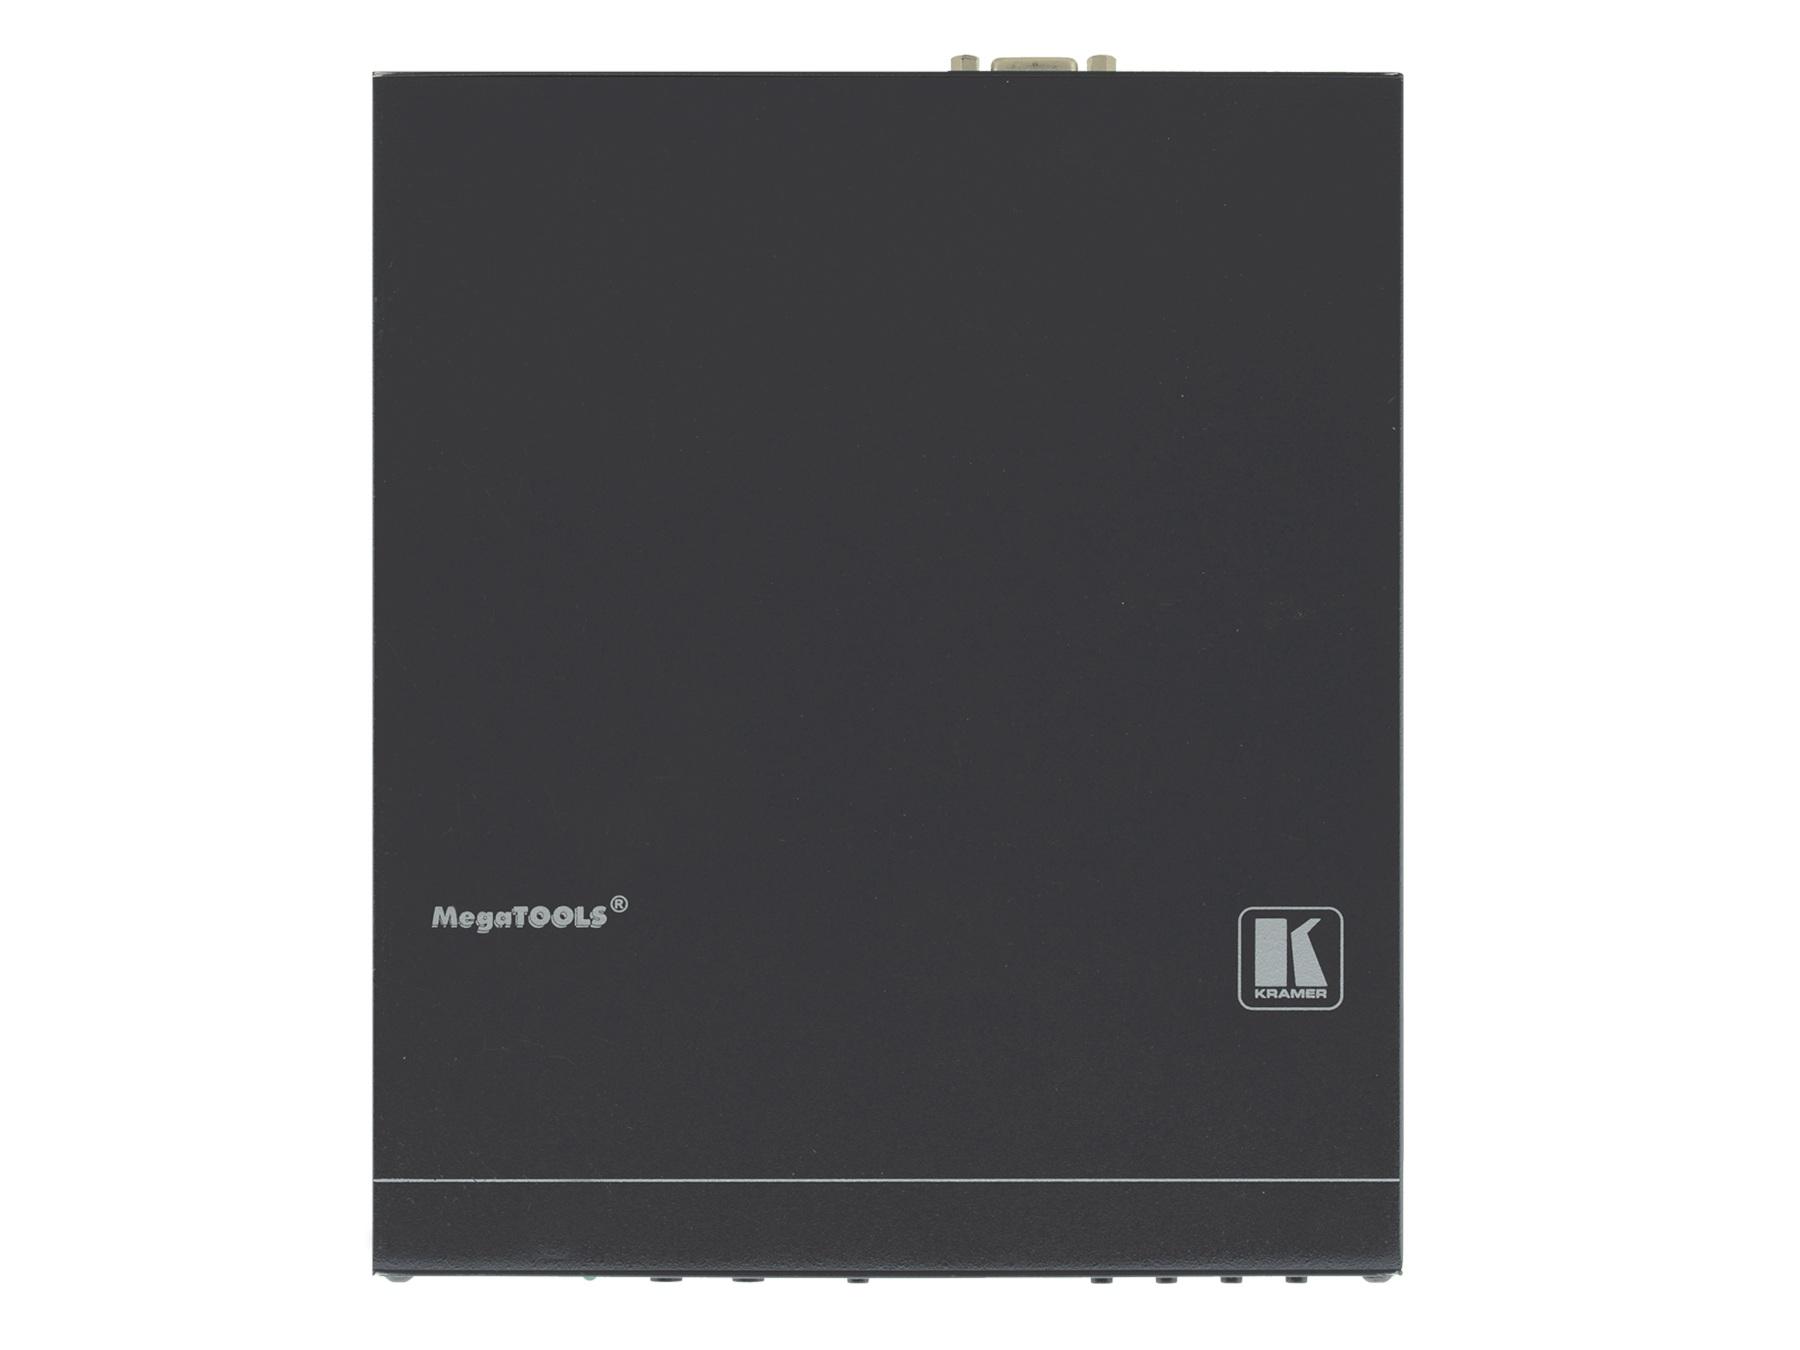 VP-428H2 4K60 HDCP 2.2 DisplayPort/HDMI/VGA Auto Switcher/Scaler and PoE Provider over HDBaseT by Kramer